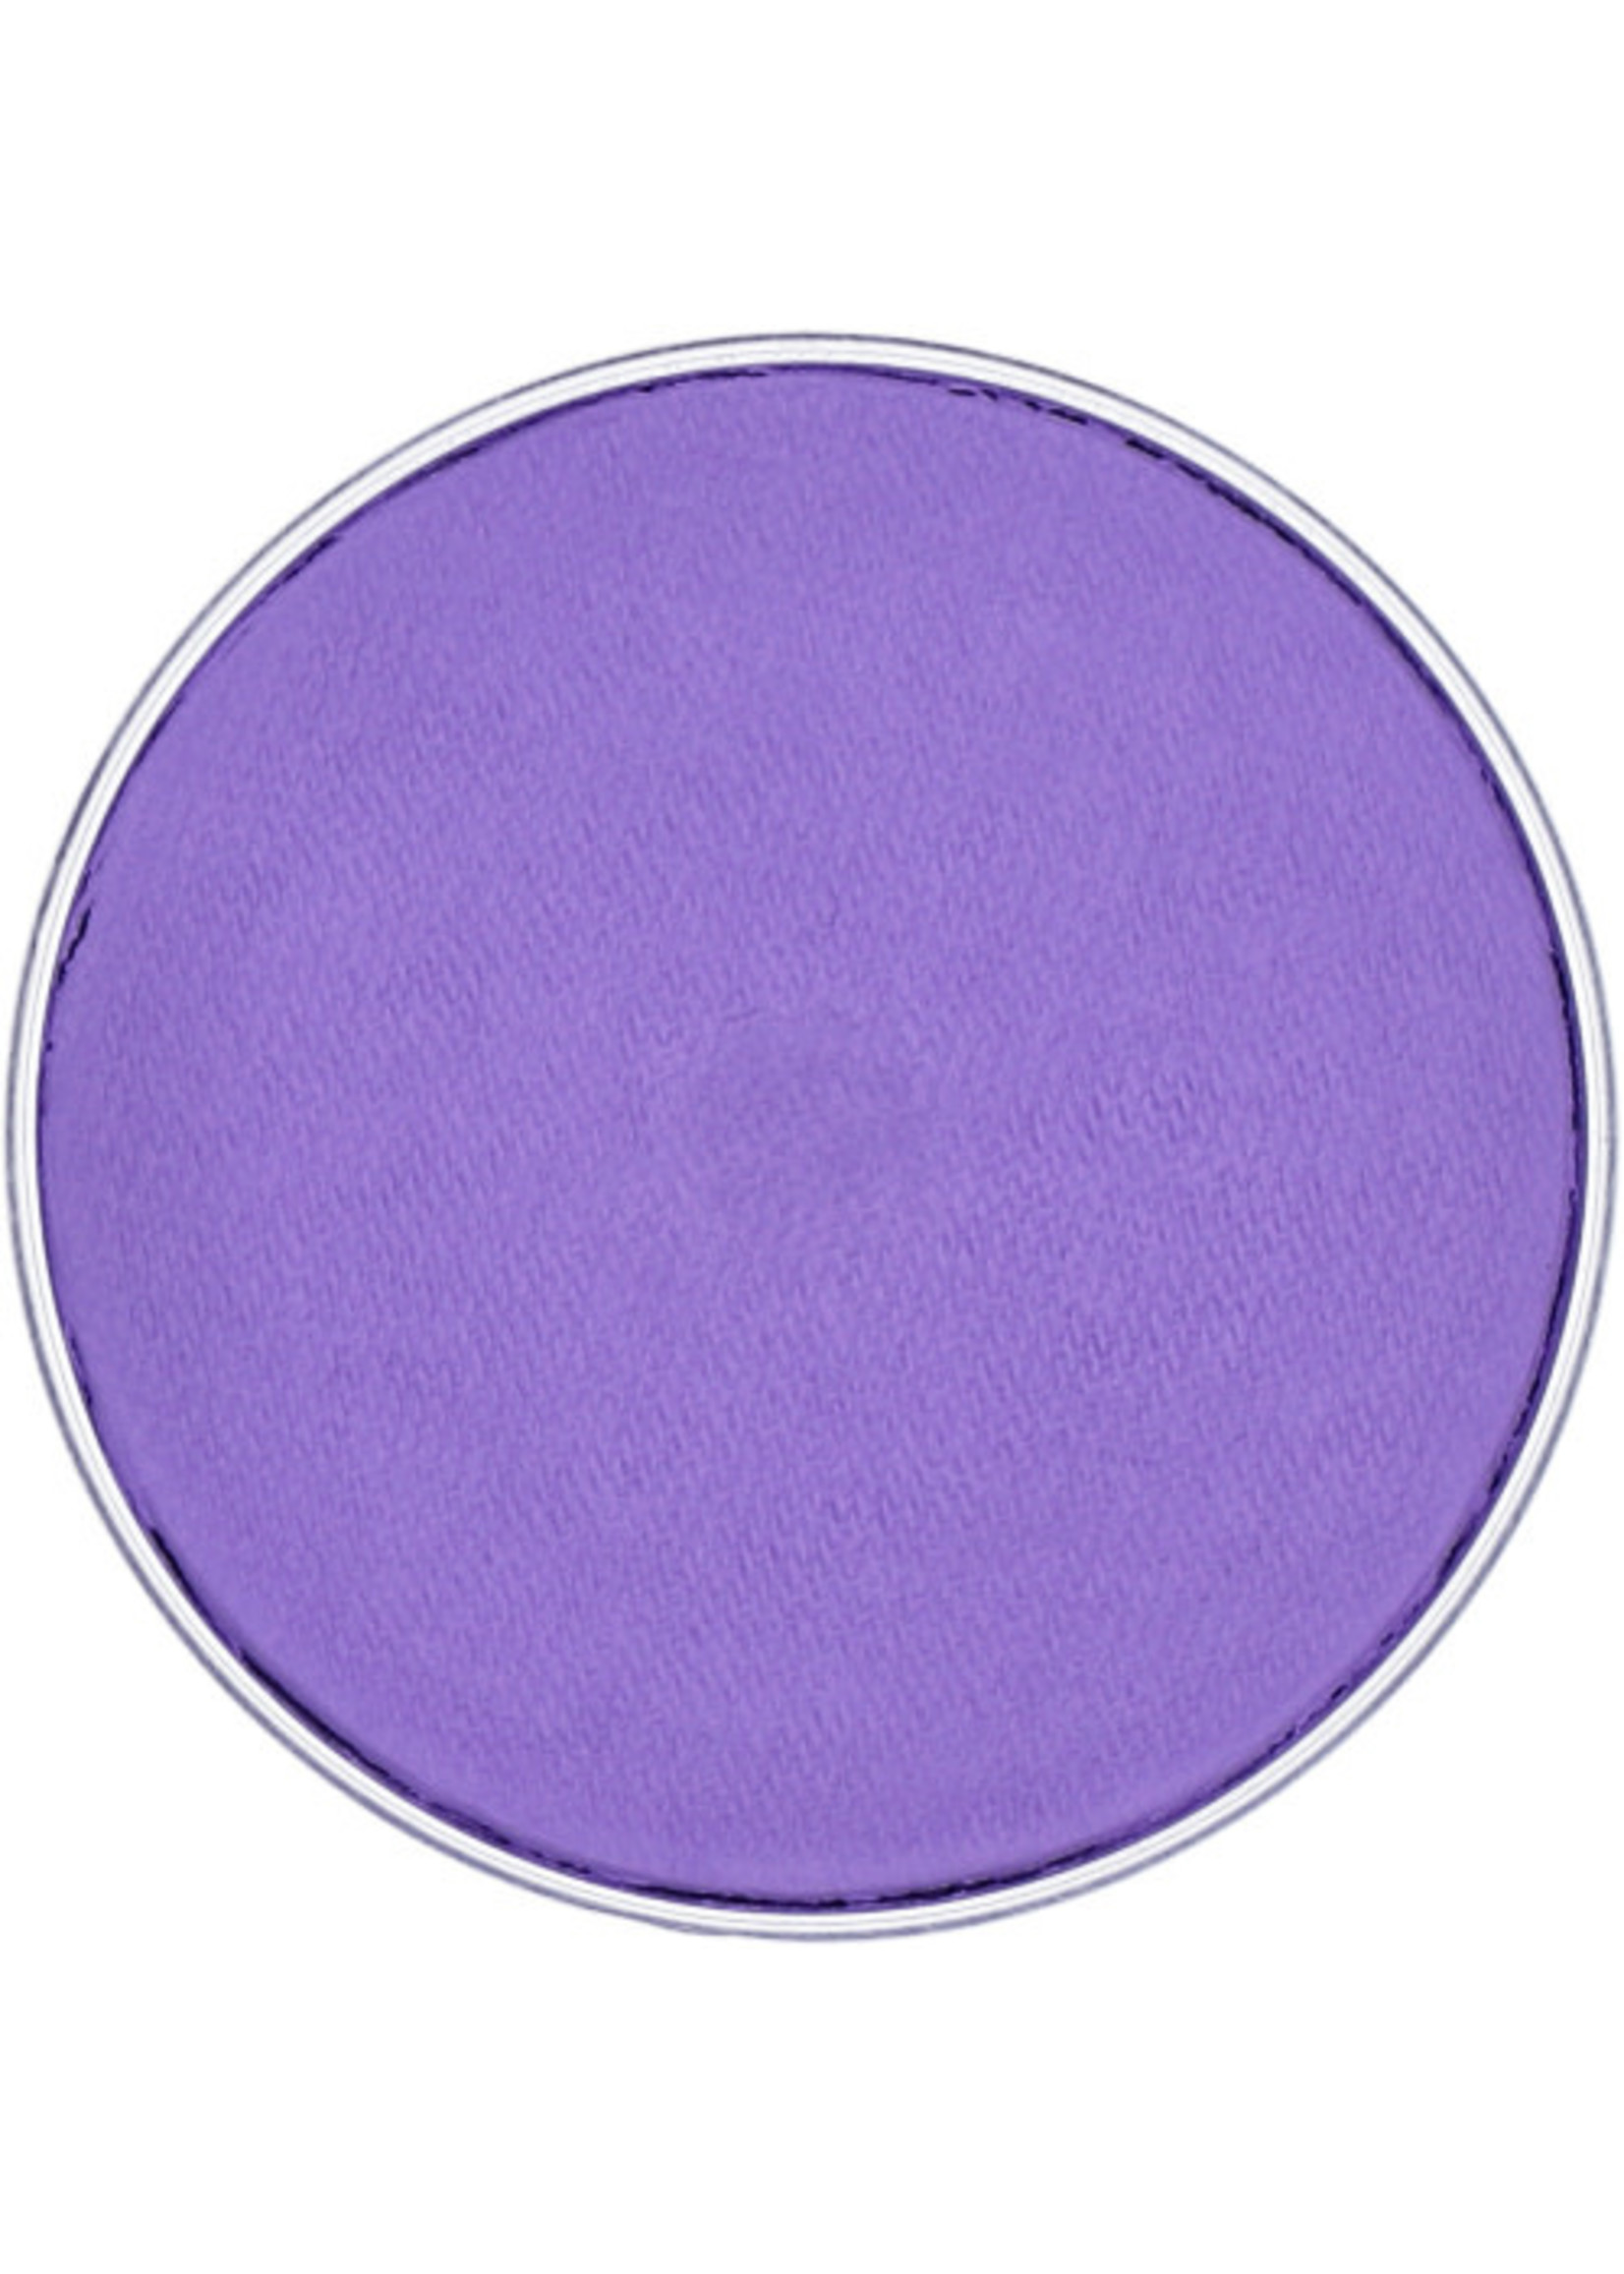 Feestkleding Breda Schmink Superstar la-laland purple 237